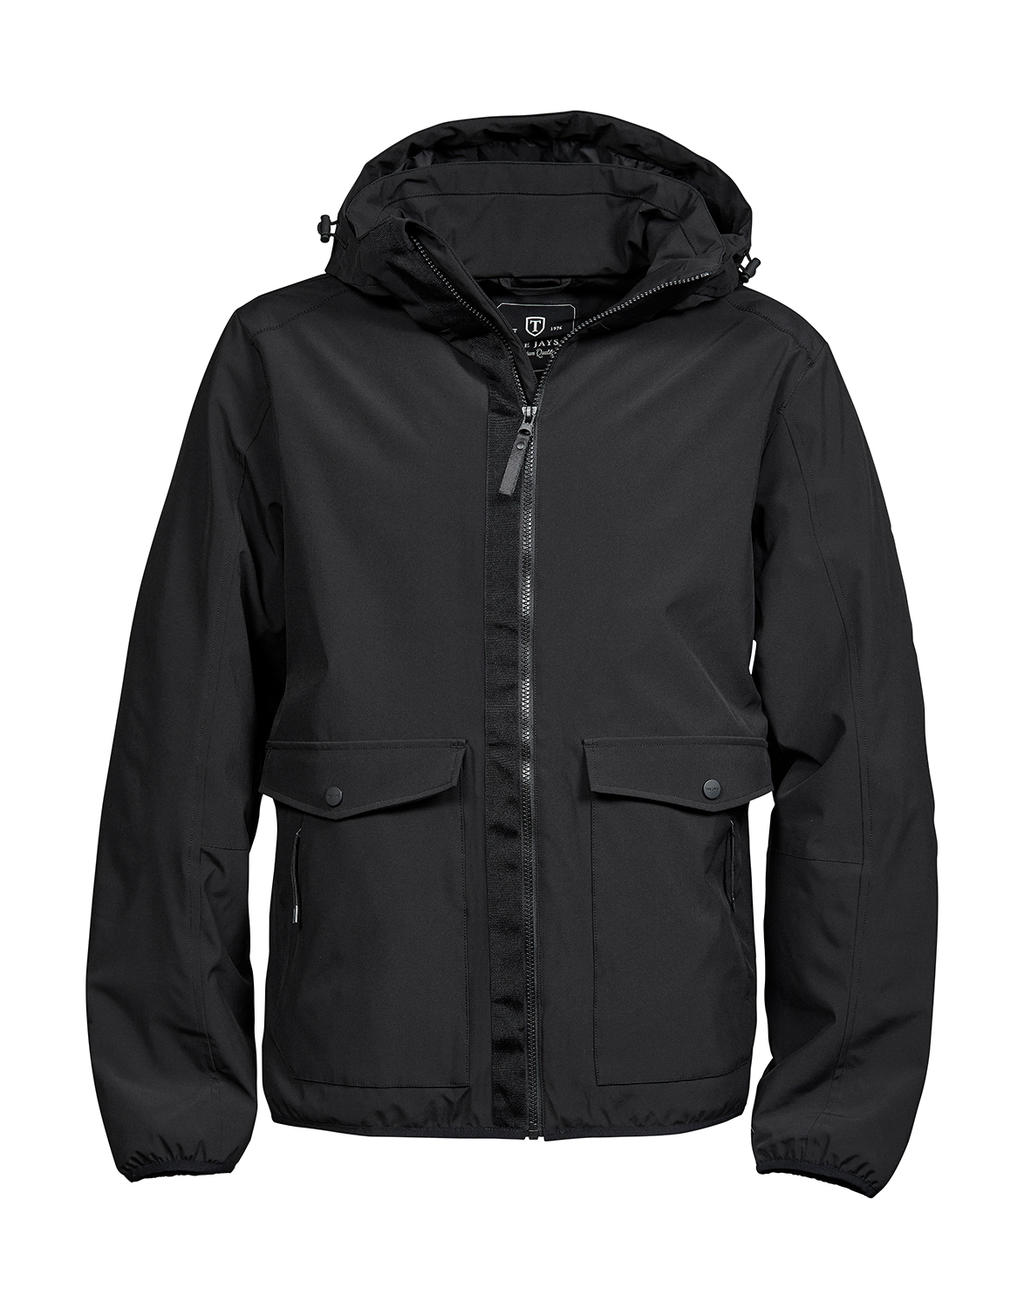  Urban Adventure Jacket in Farbe Black